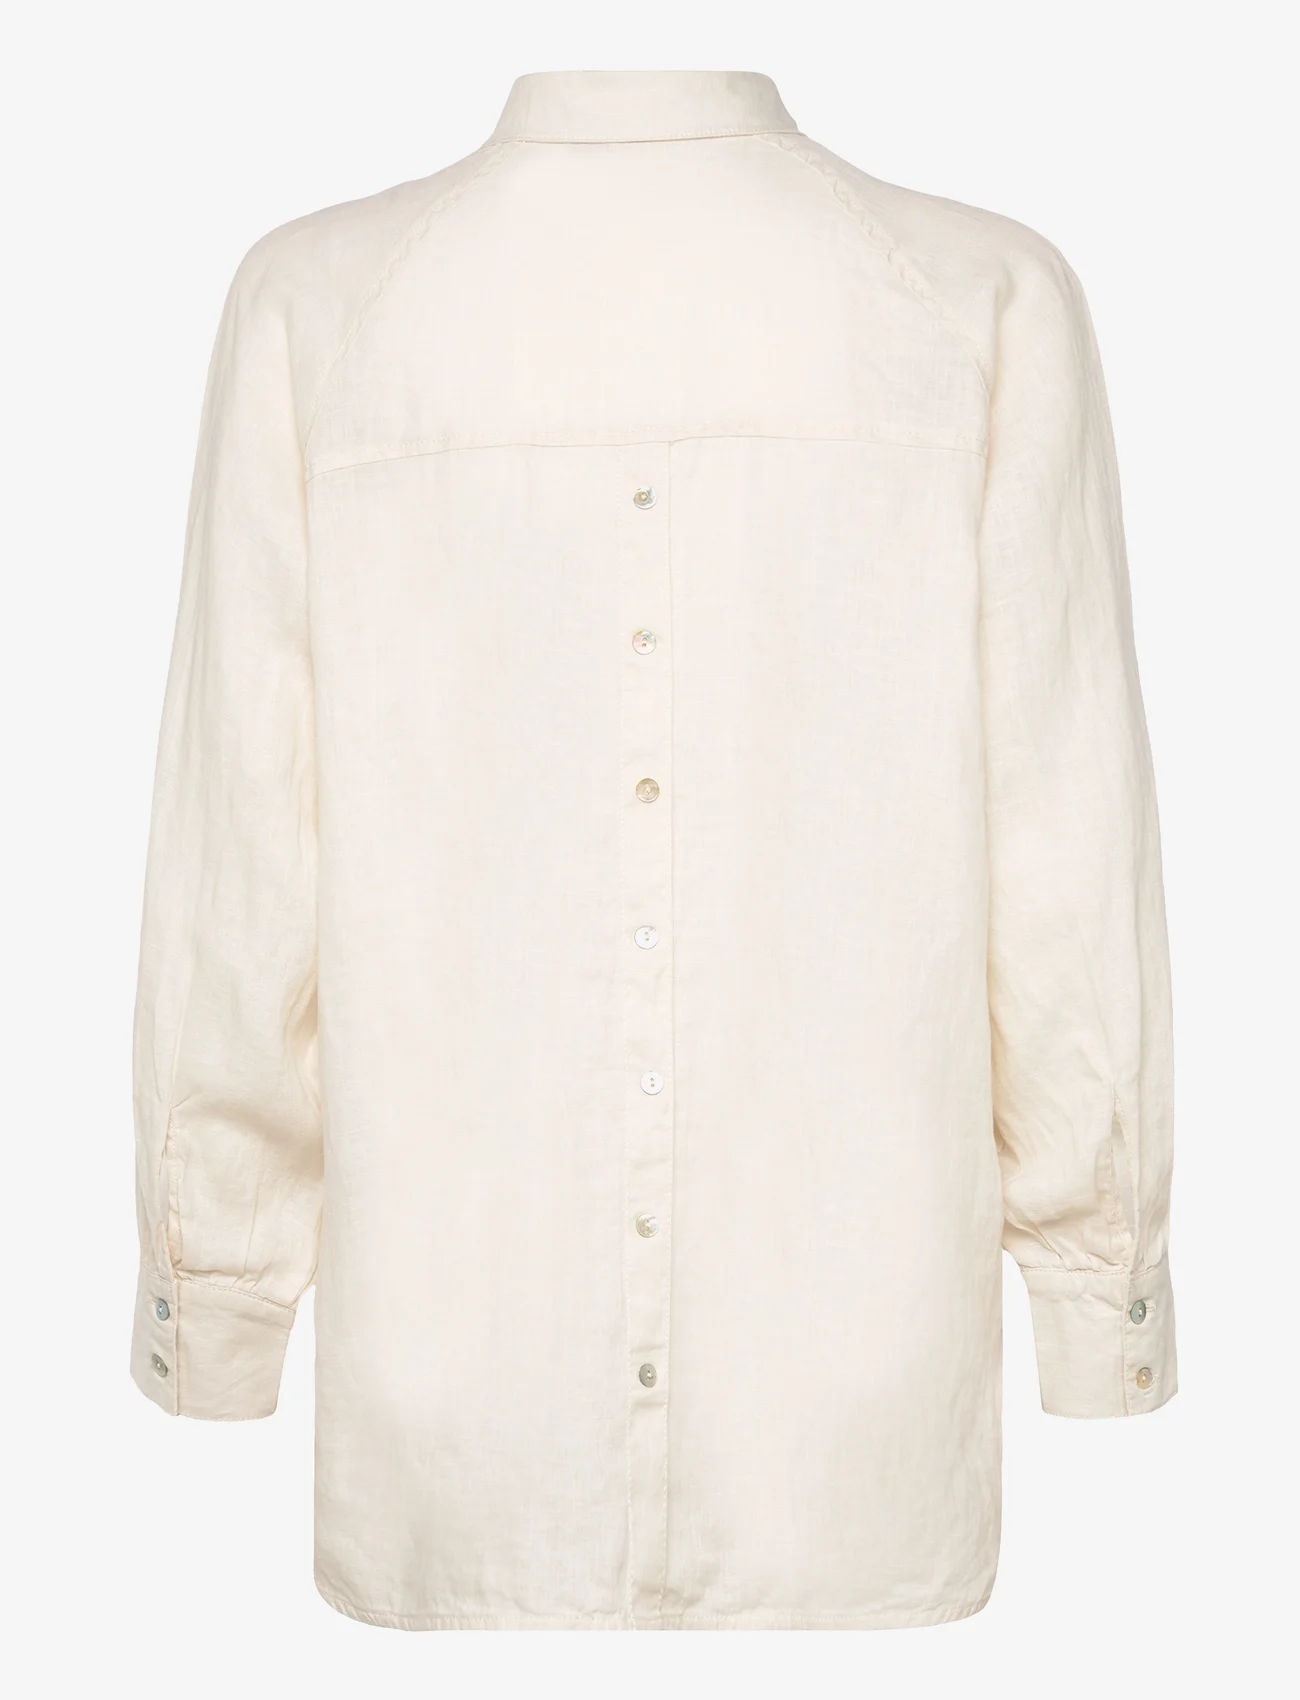 Brandtex - B. COPENHAGEN Shirt l/s Woven - linen shirts - tofu - 1